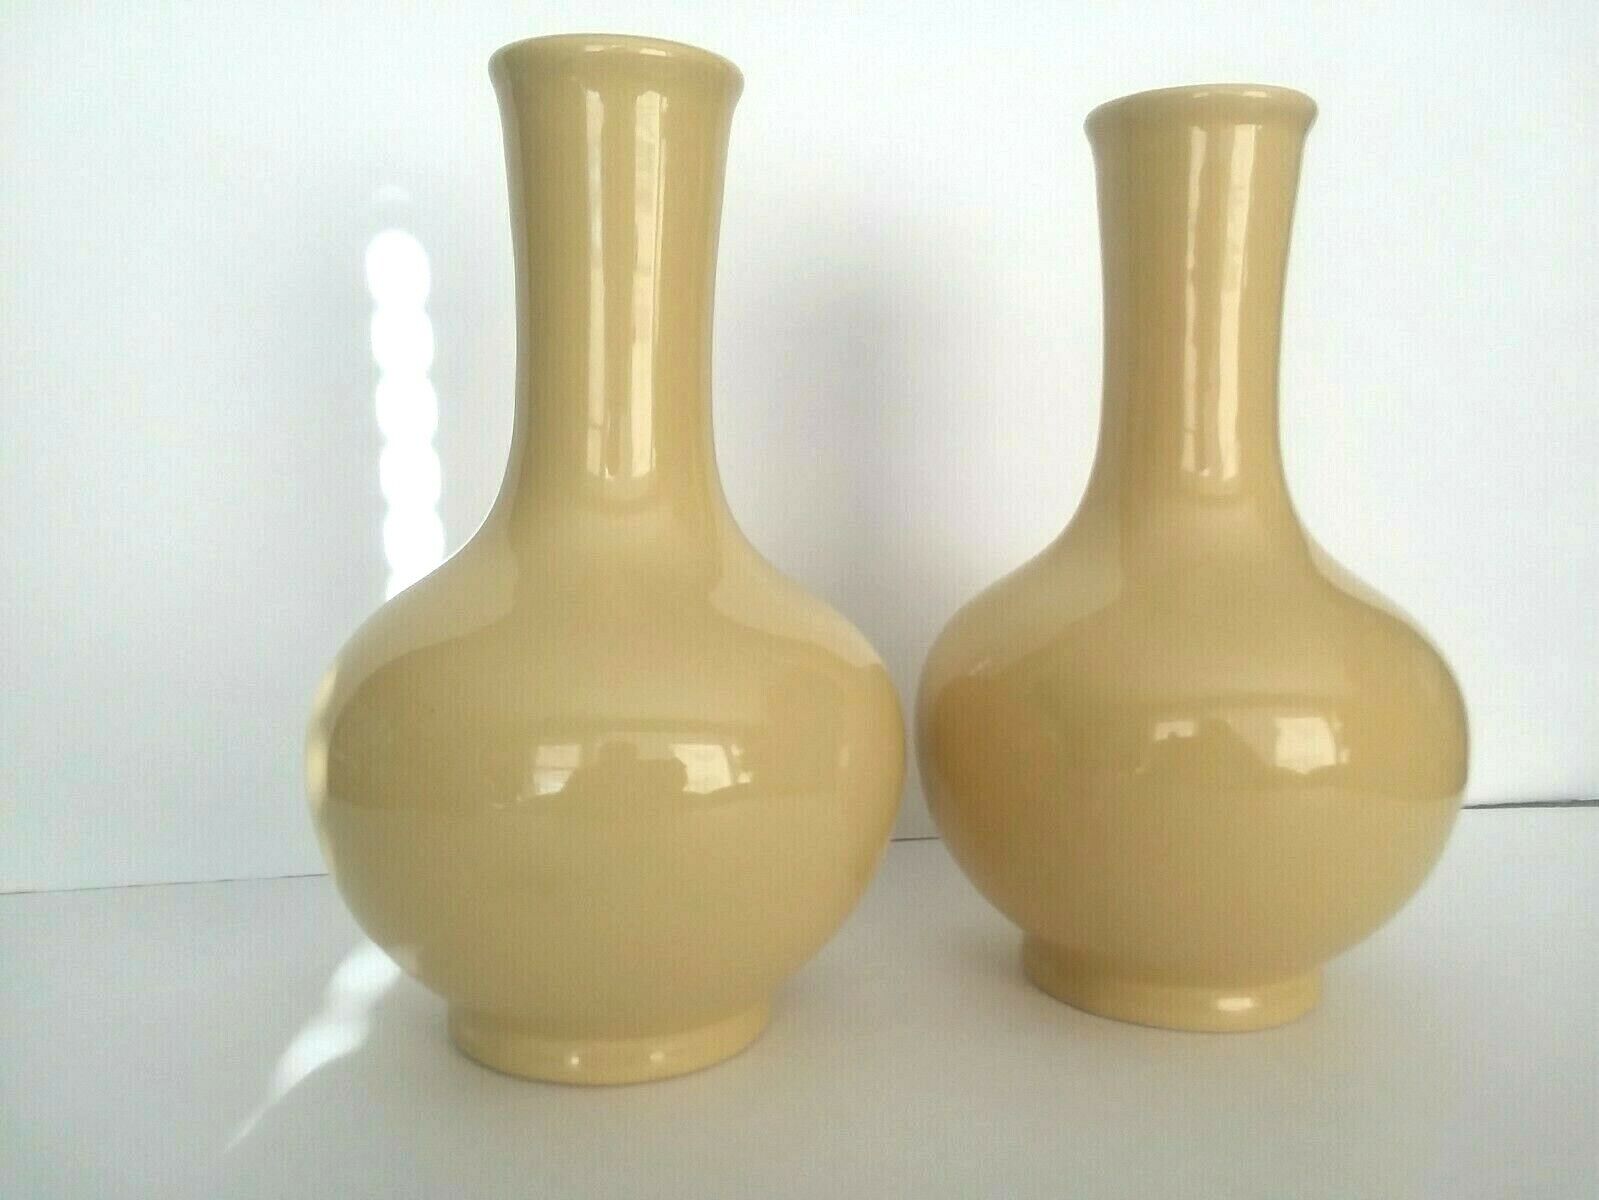 2 Vintage KOHLER Pottery Vases Used As TEST glaze  Sink Tub Toilet Genie bottle Без бренда - фотография #4